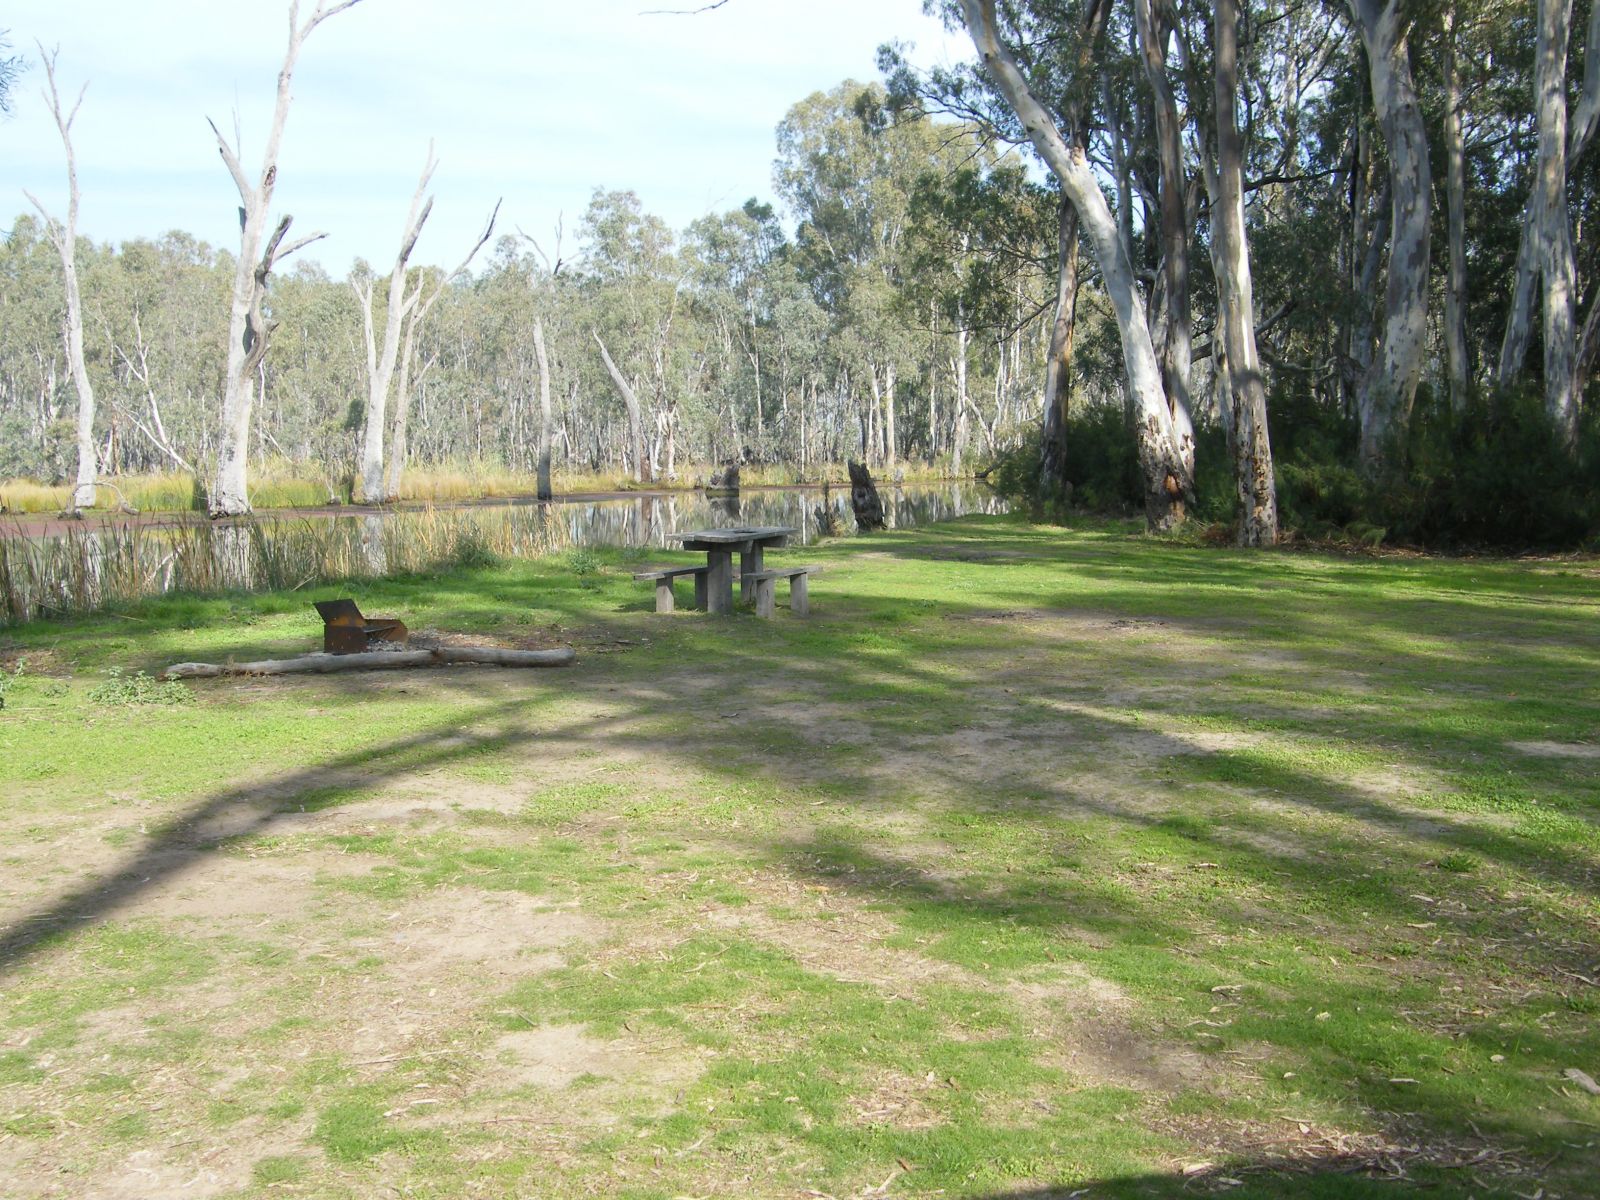 A grassy picnic area next to a creek